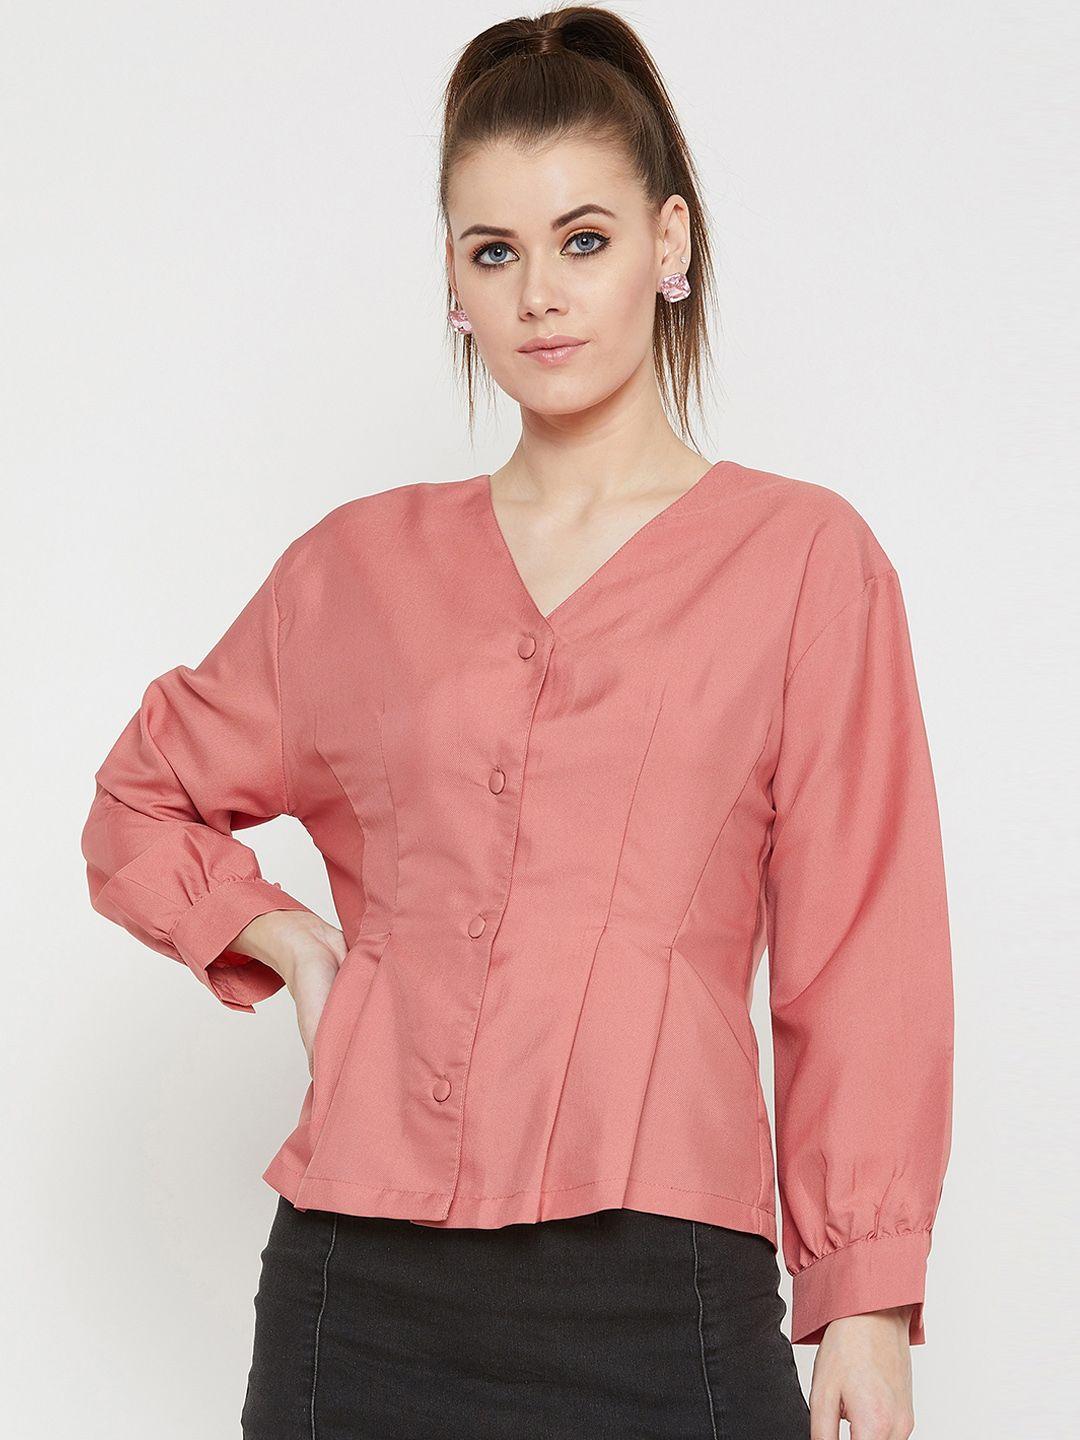 carlton-london-women-pink-solid-shirt-style-top